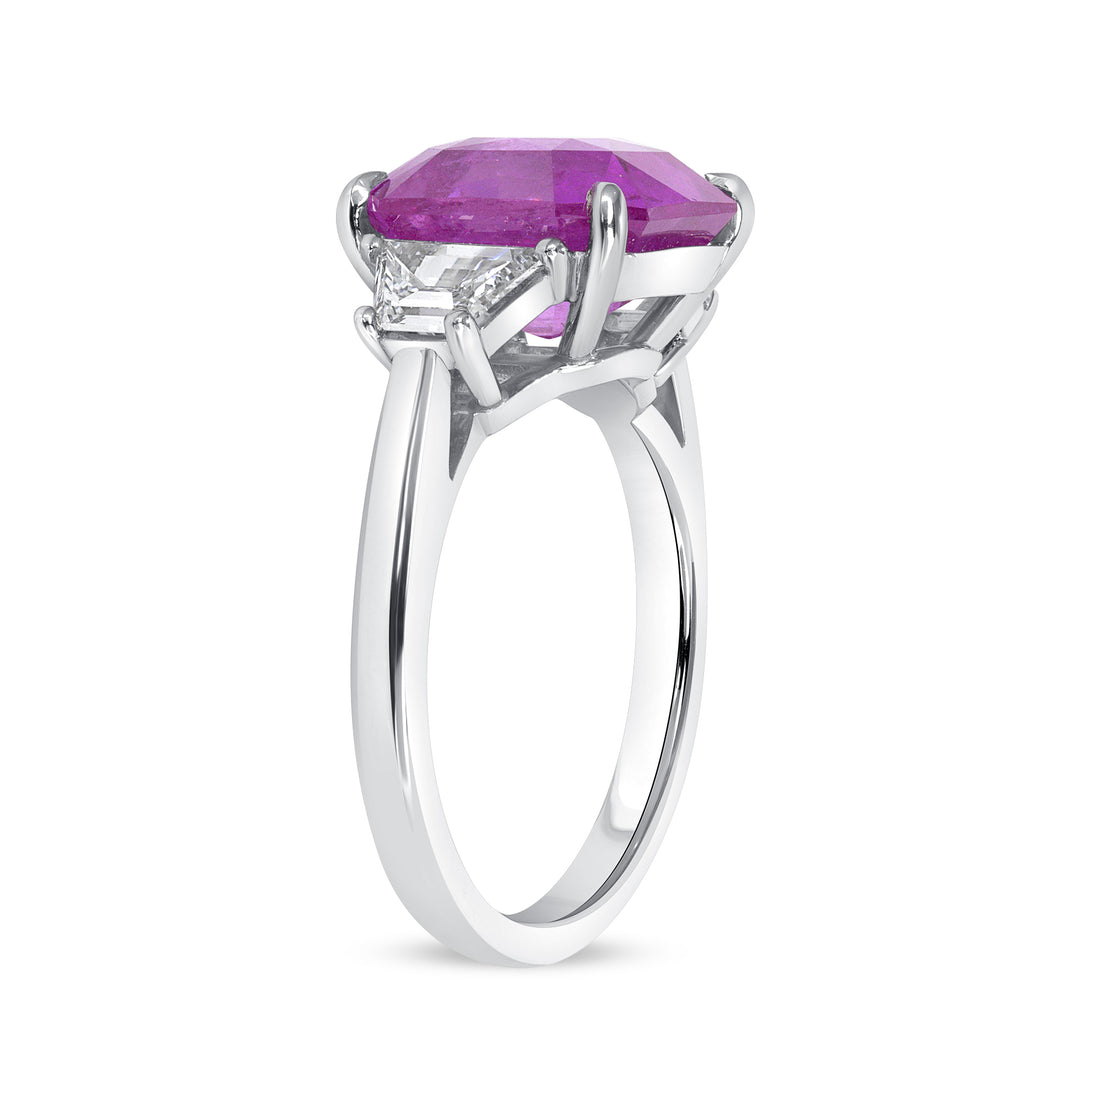 Emerald Cut Pink Sapphire and Trapezoid Cut Diamond Ring